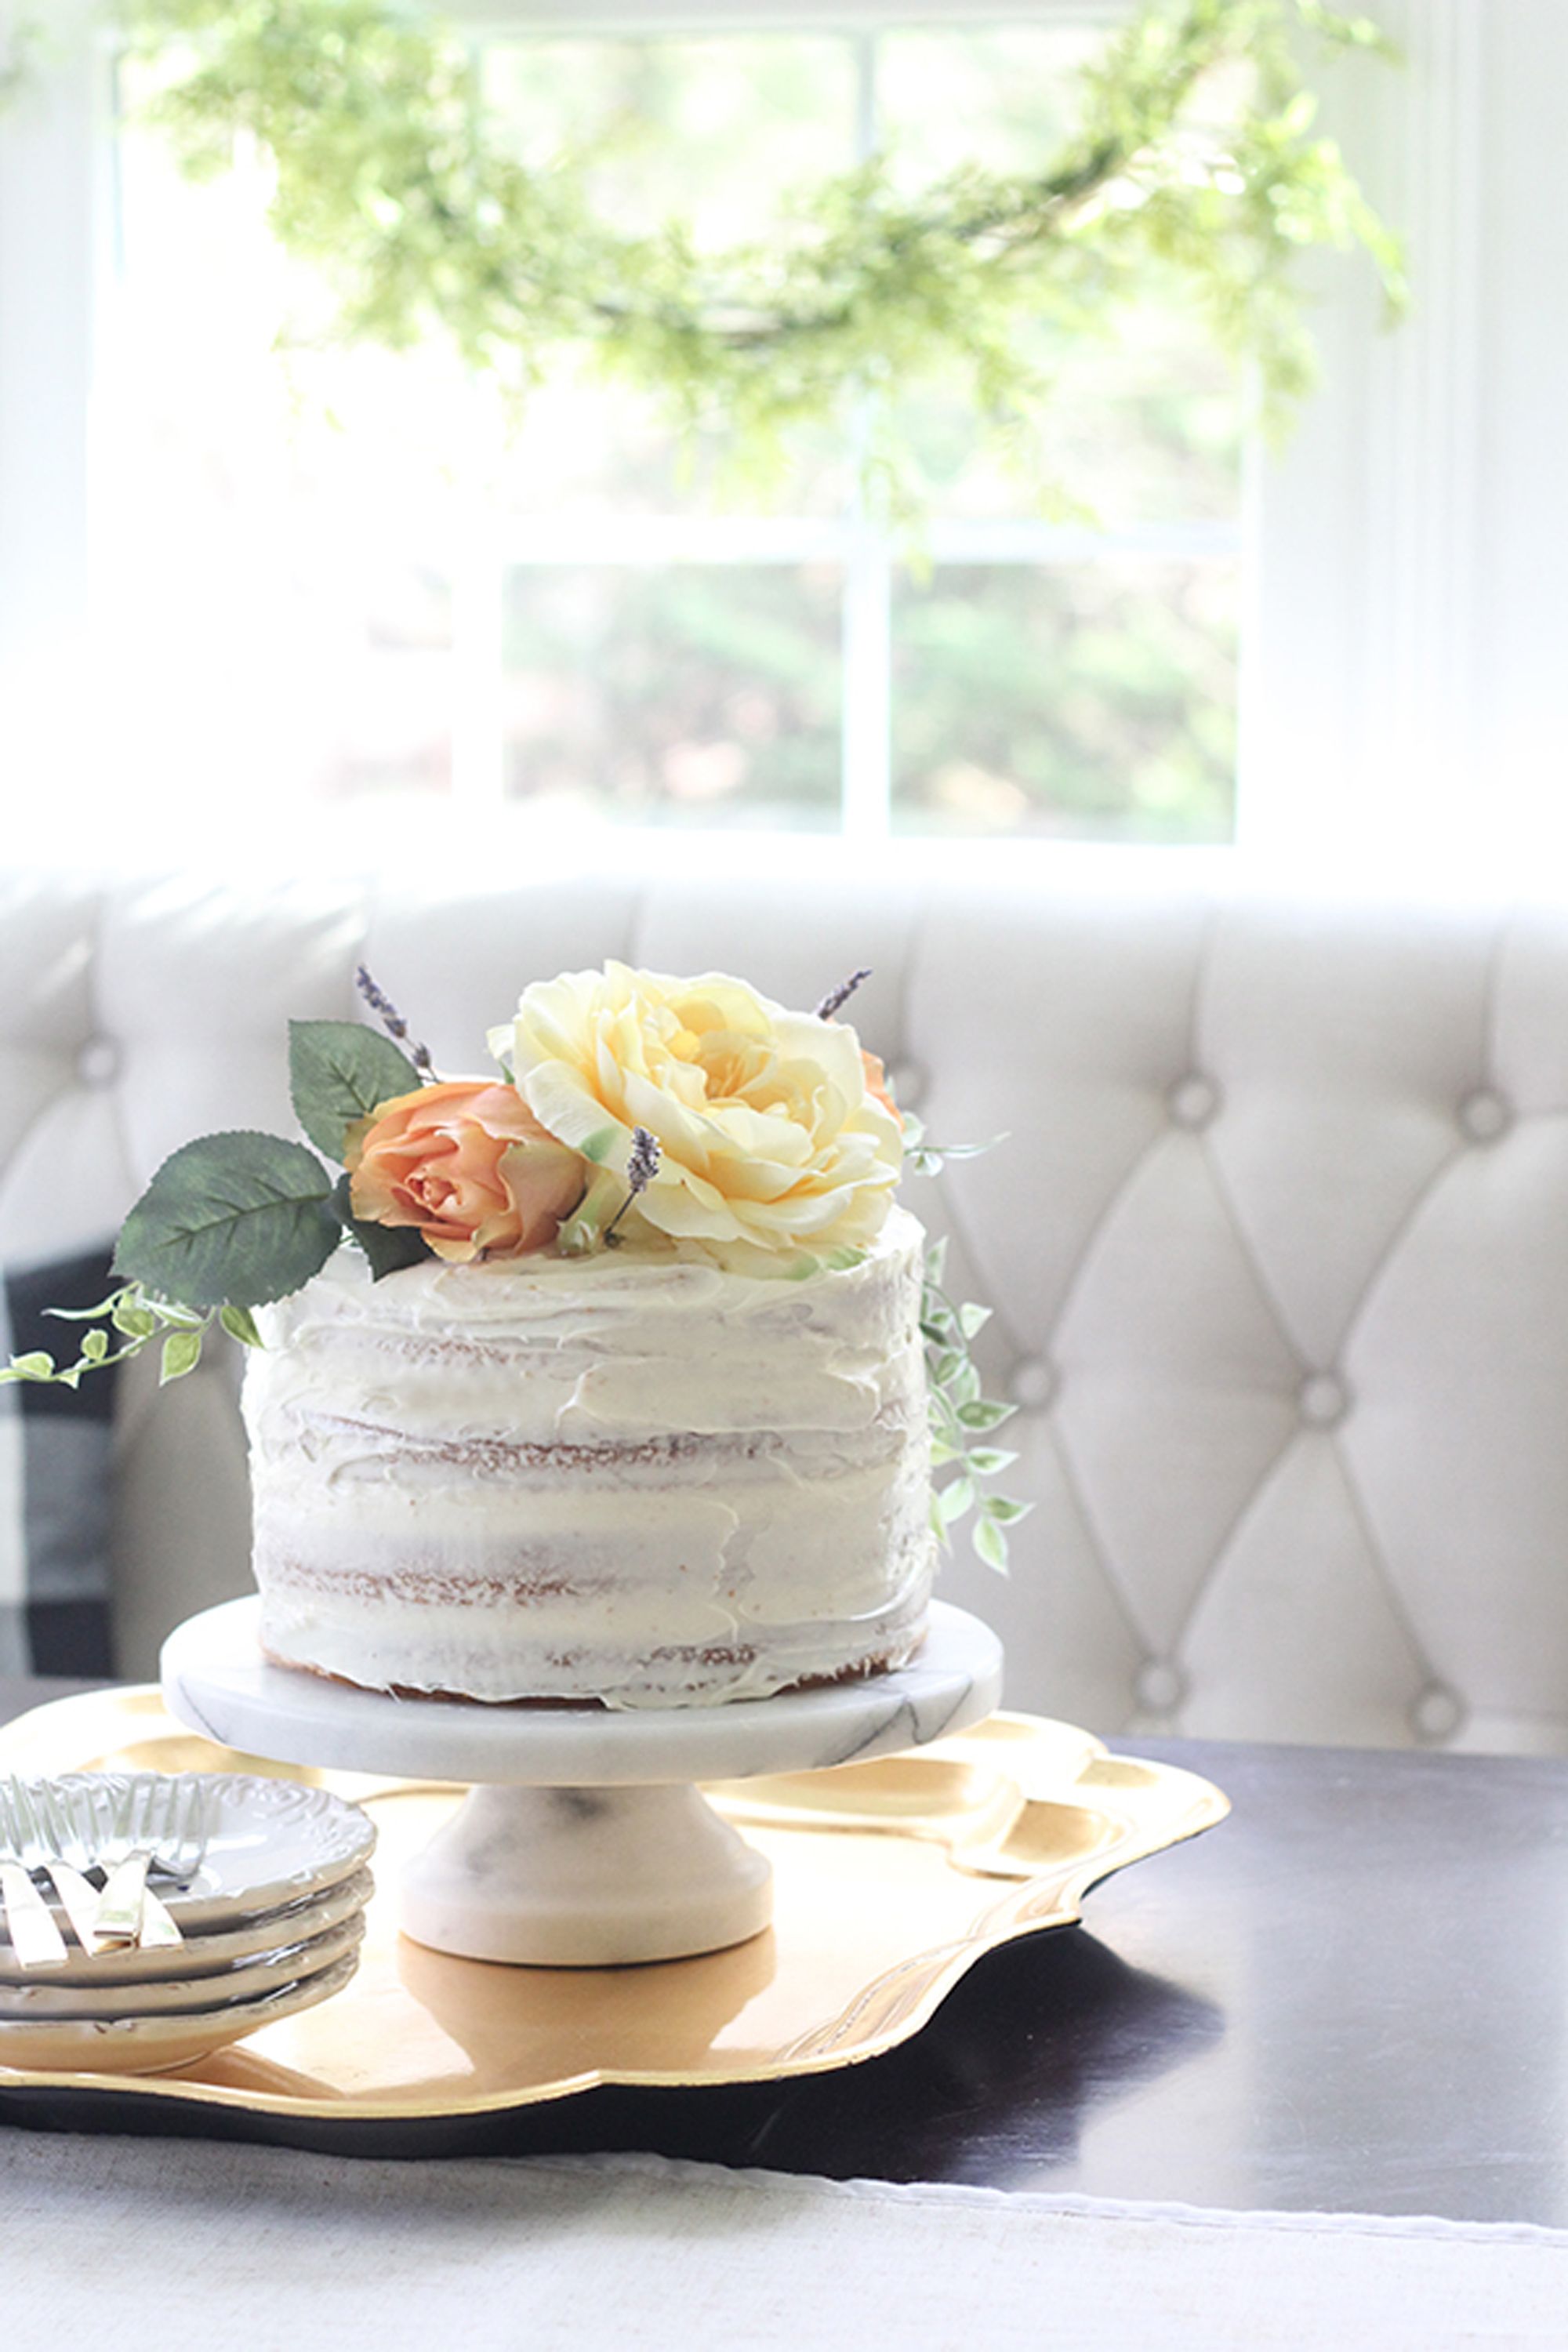 Simple Homemade Wedding Cake Recipe - Sally's Baking Addiction